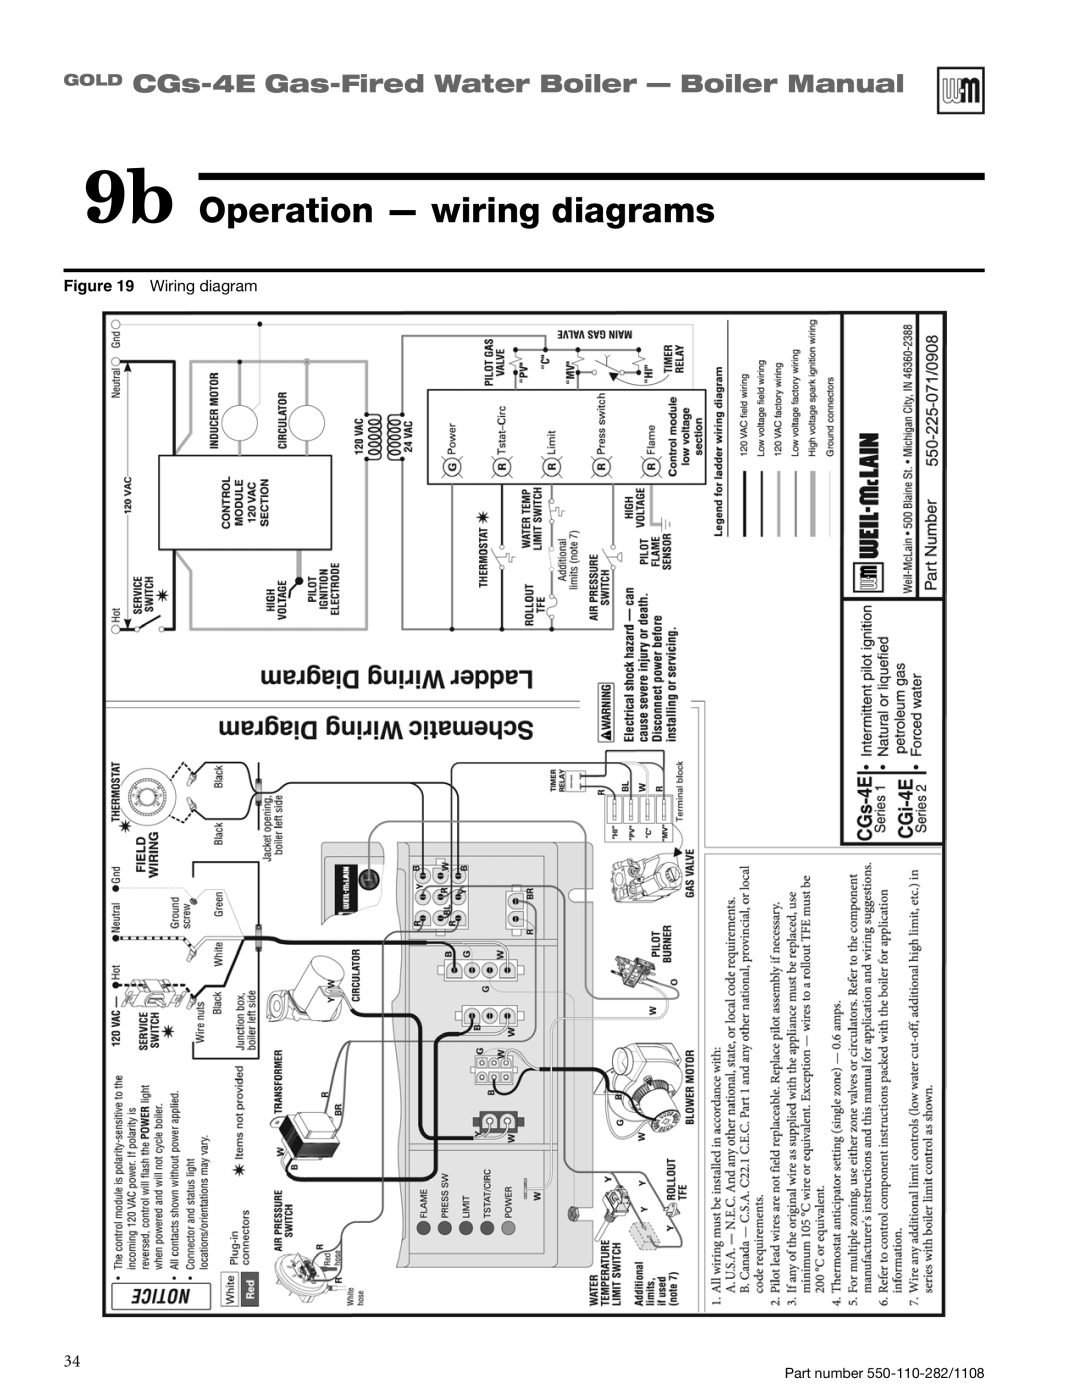 Weil-McLain CGS-4E manual 9b Operation - wiring diagrams, GOLD CGs-4E Gas-FiredWater Boiler - Boiler Manual, Wiring diagram 